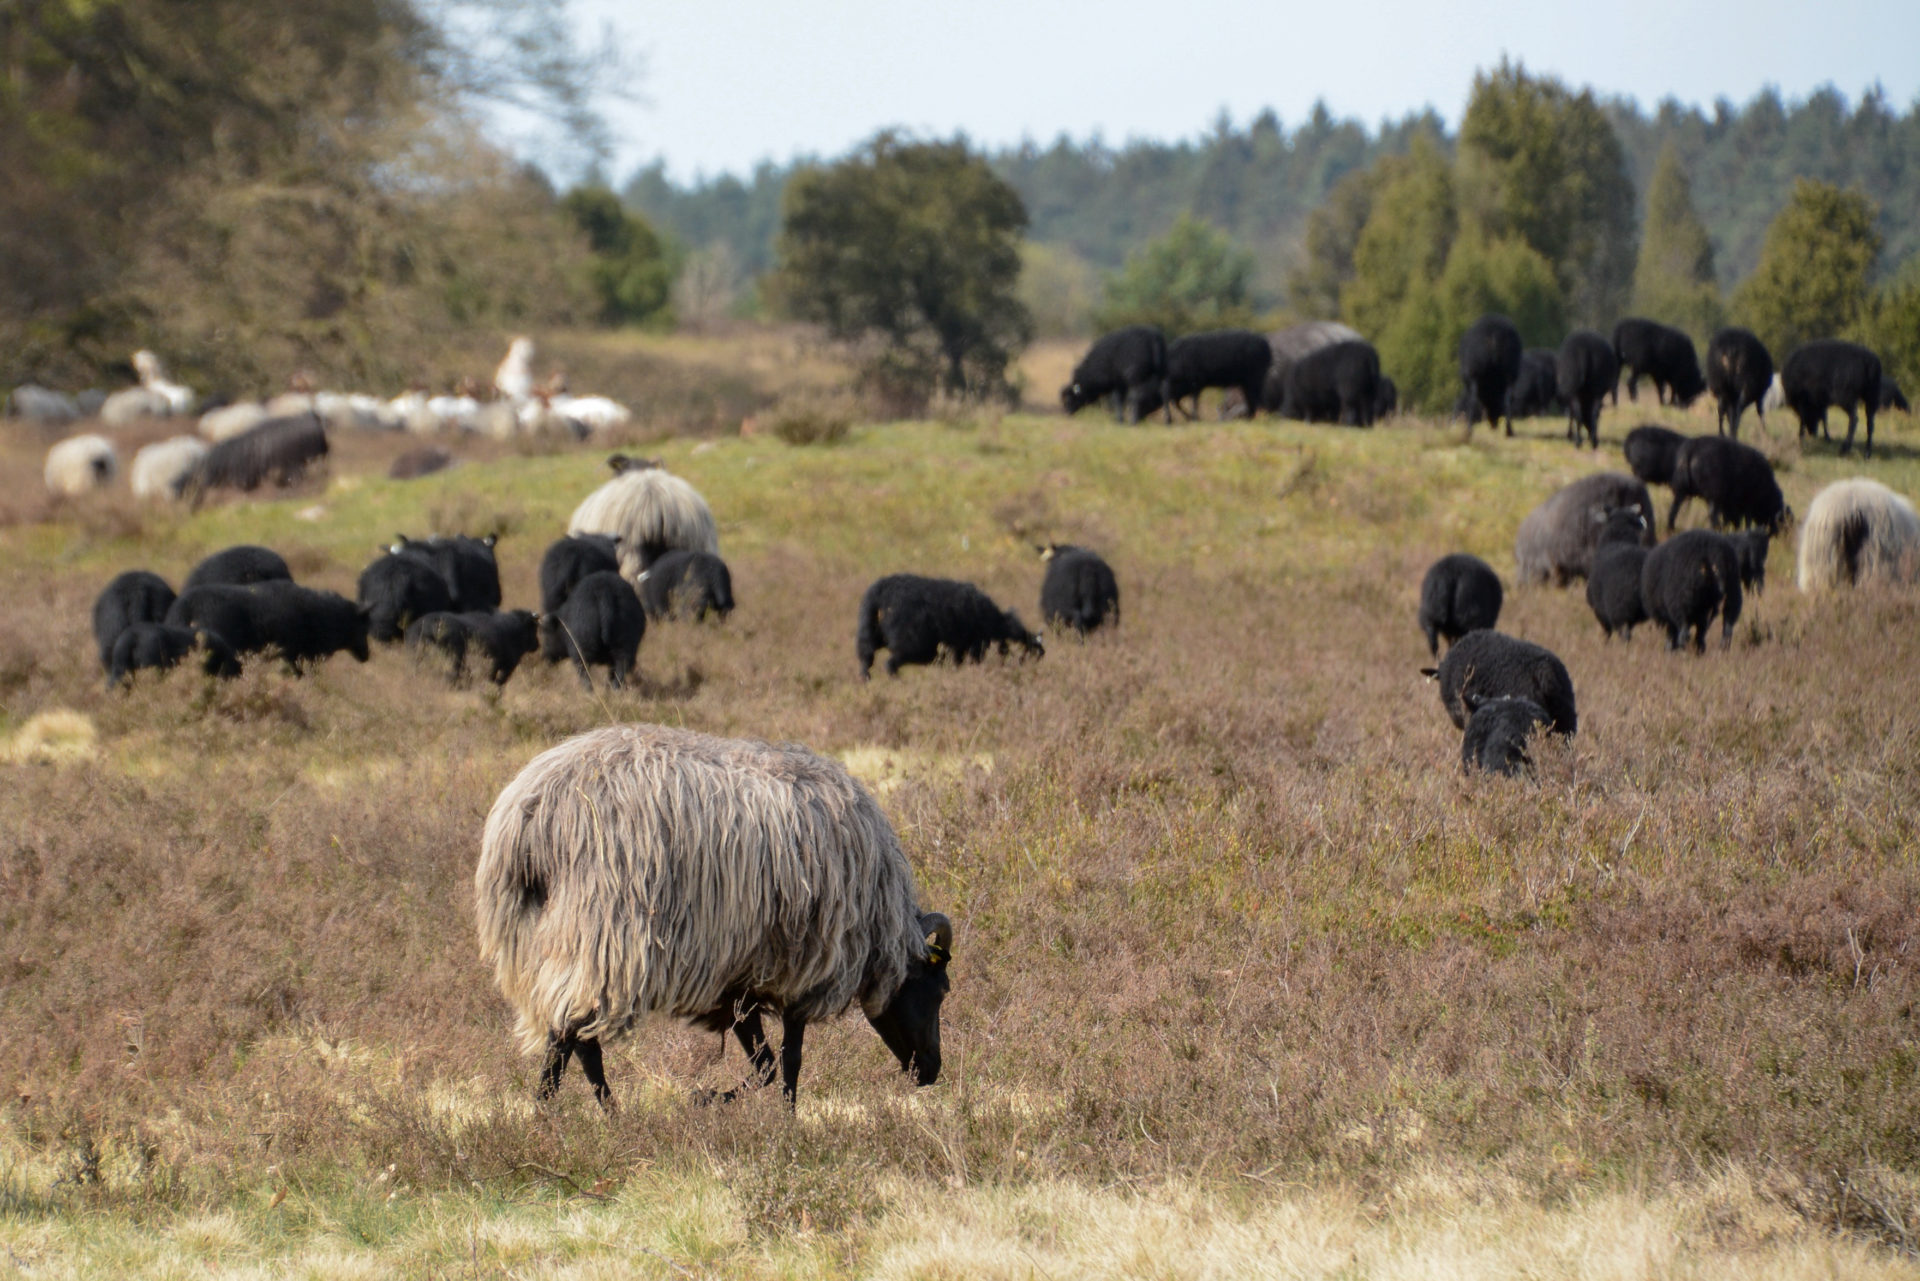 Schafsherde mit vielen schwarzen Exemplaren bei Egestorf